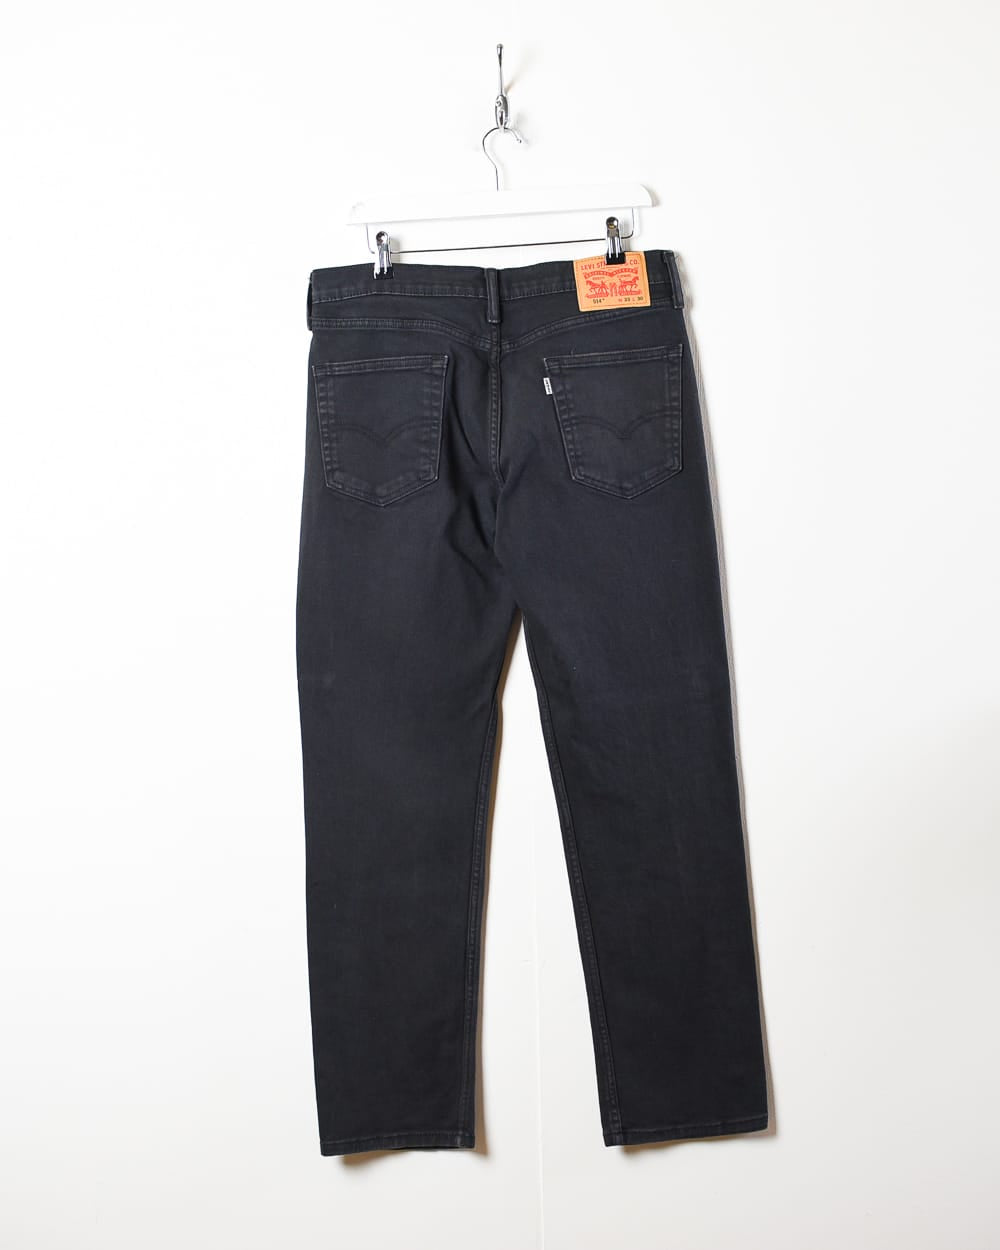 Black Levi's 514 Jeans - W34 L30